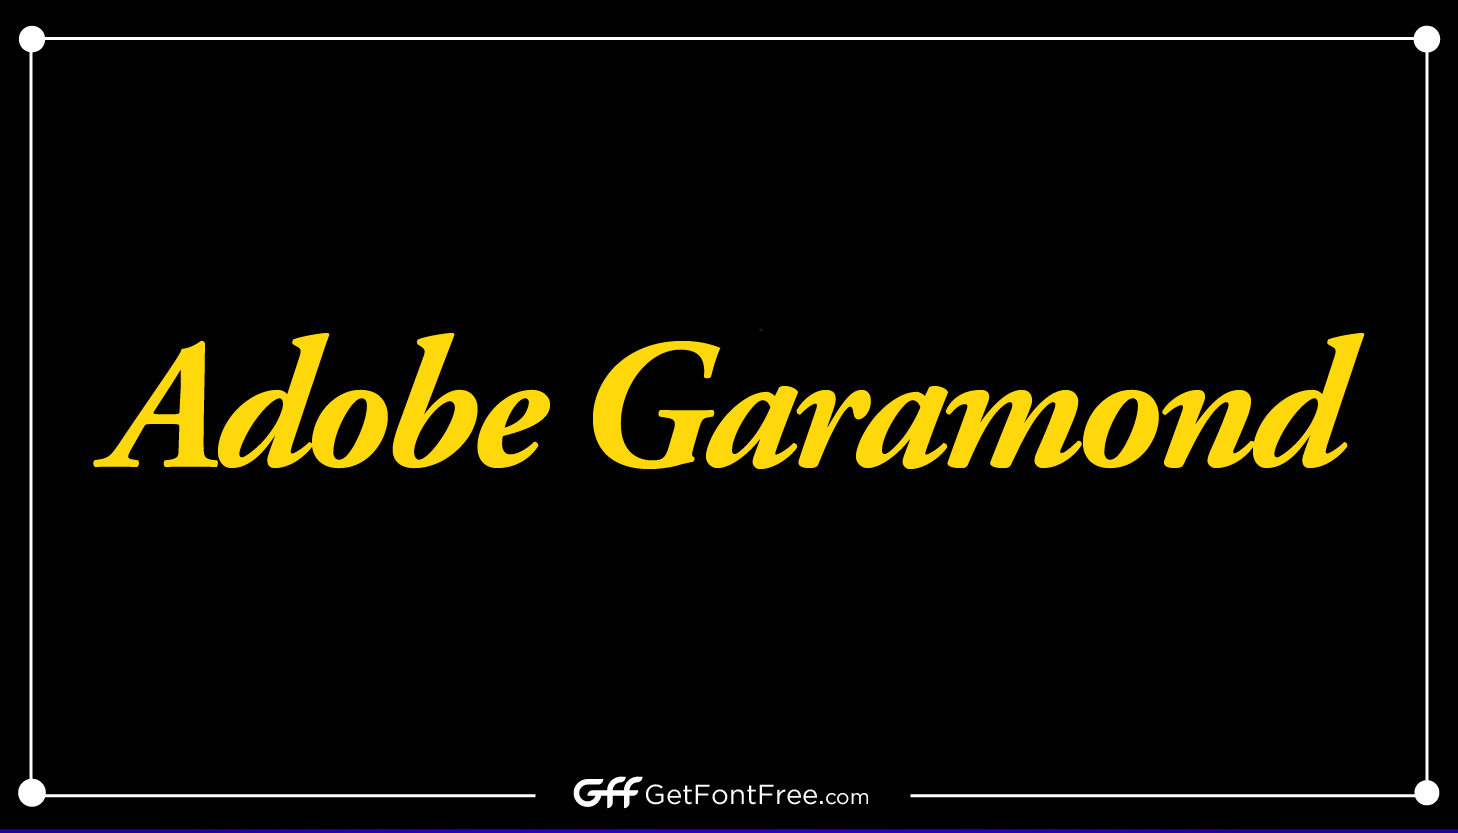 Adobe Garamond Font Free